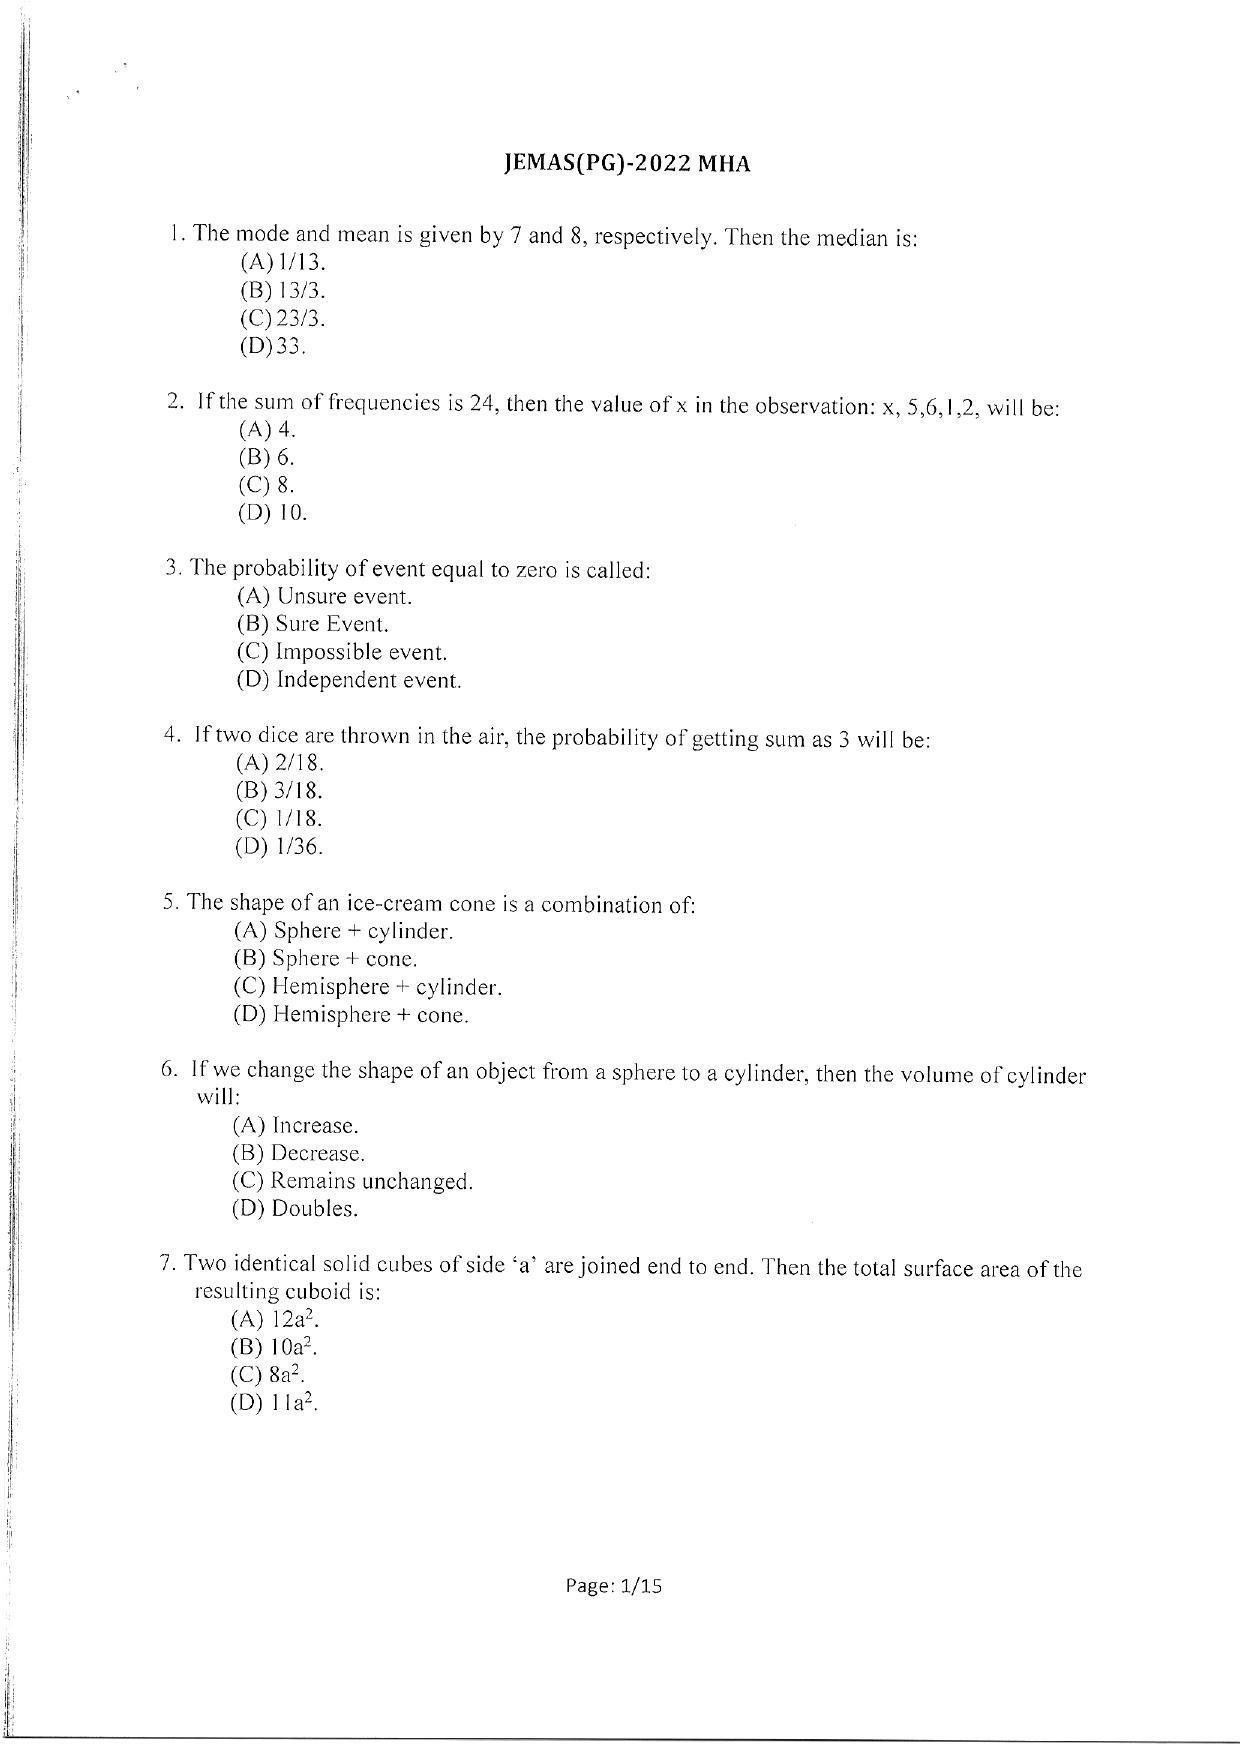 WBJEEB JEMAS (PG) 2022 MHA Question Paper - Page 3